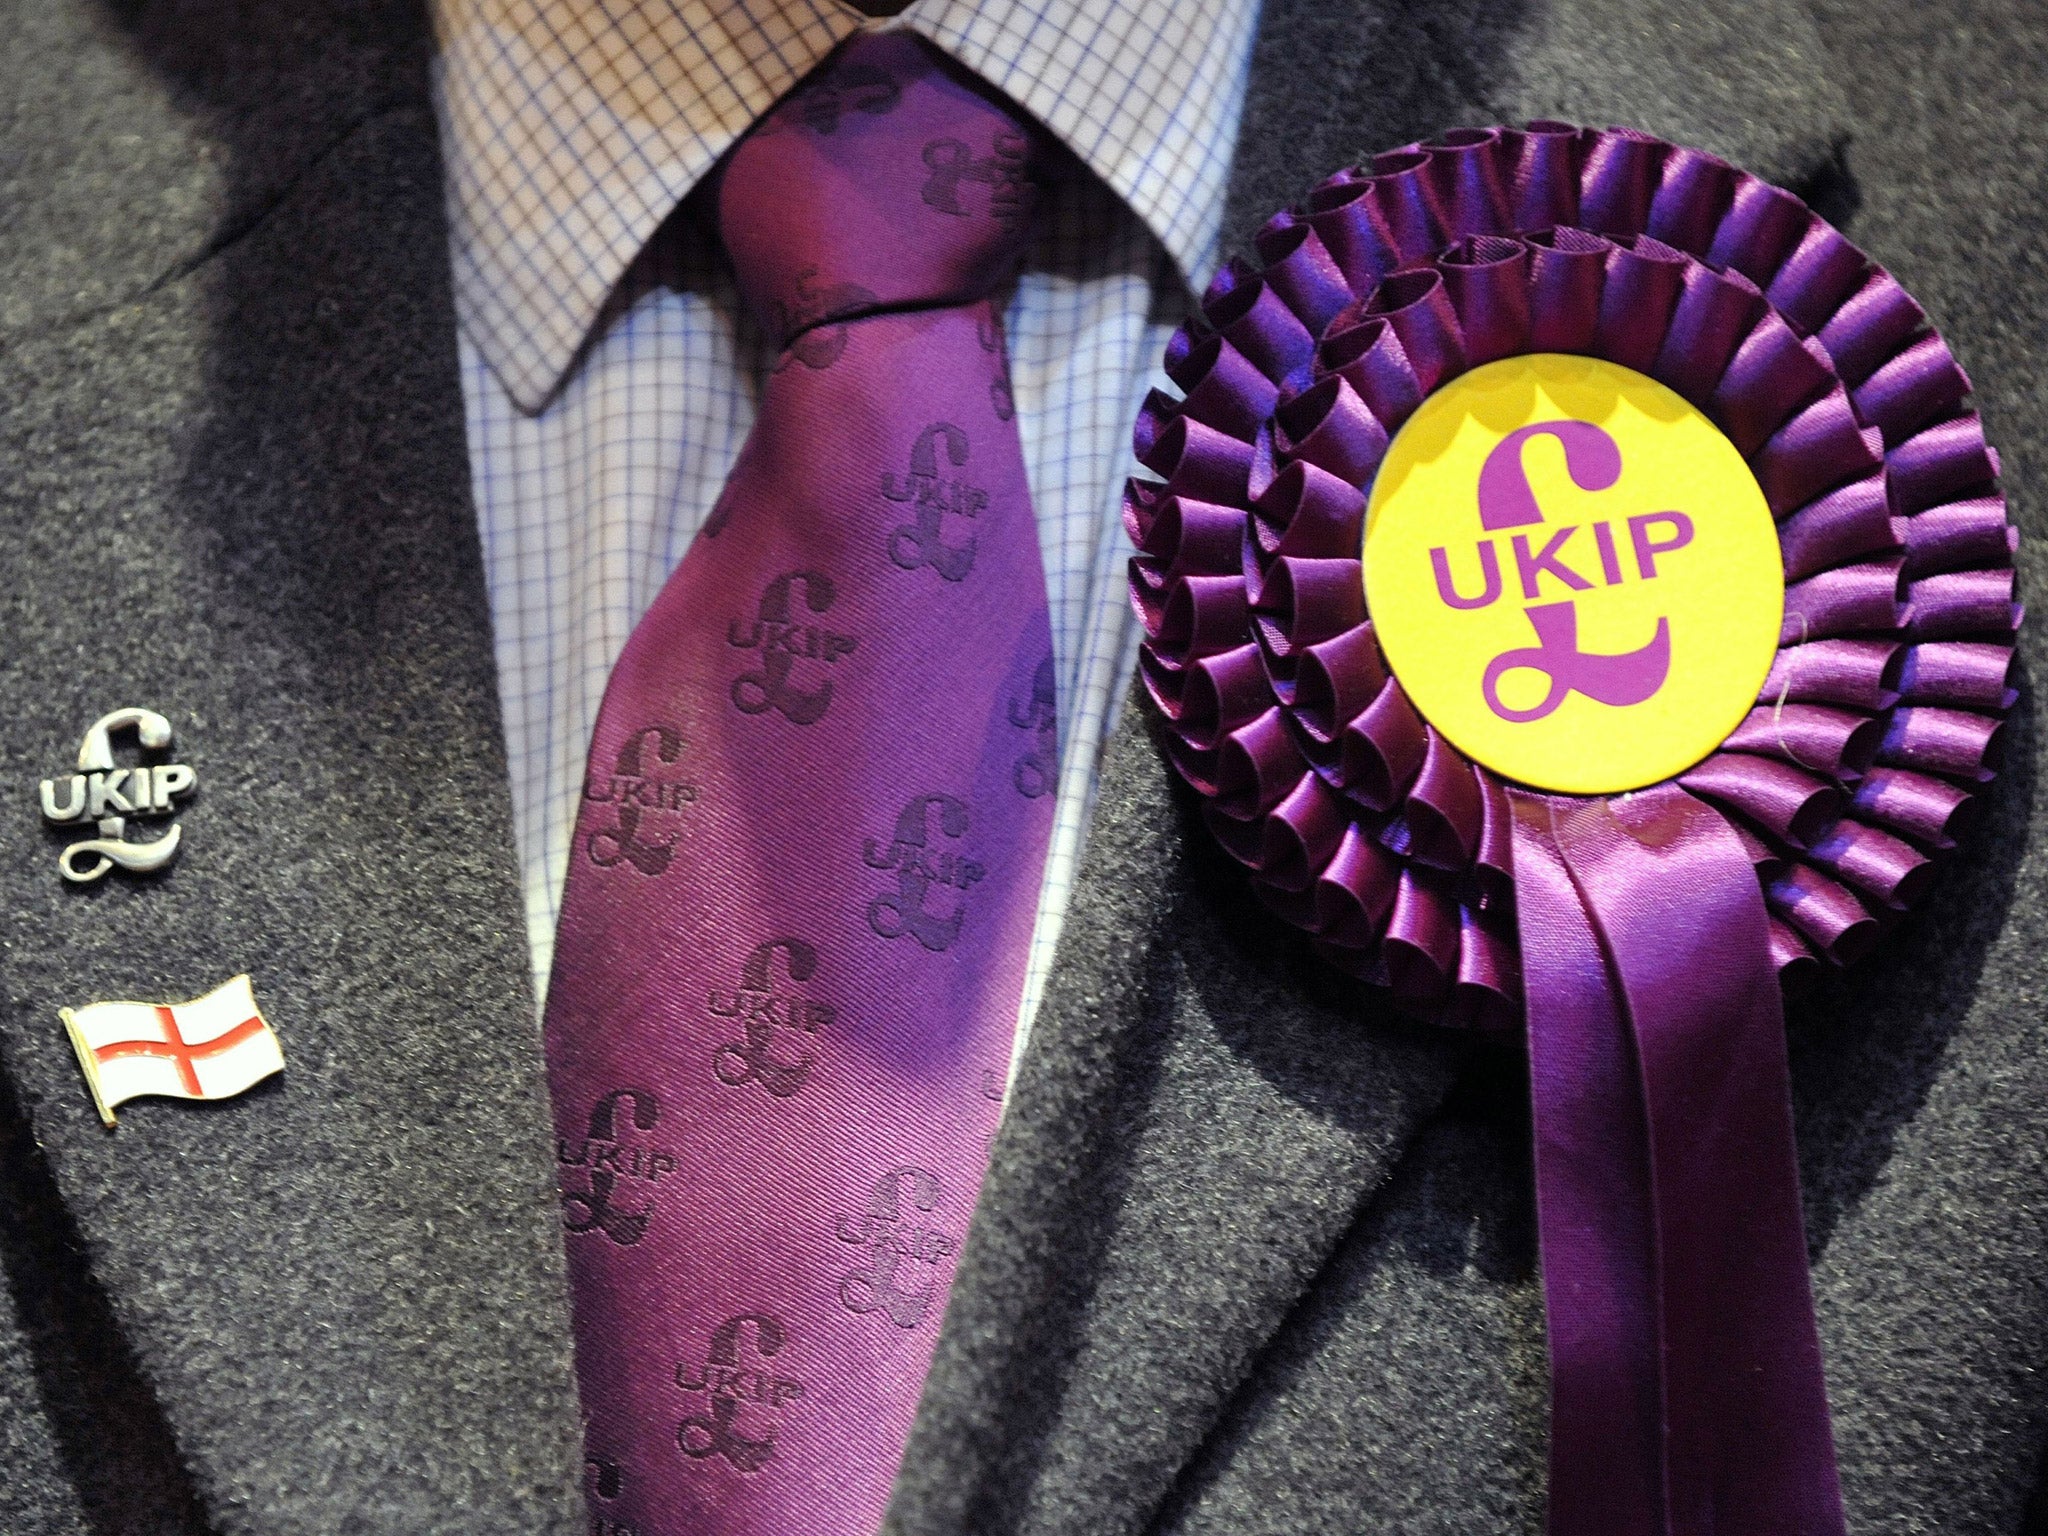 A UKIP candidate's rosette